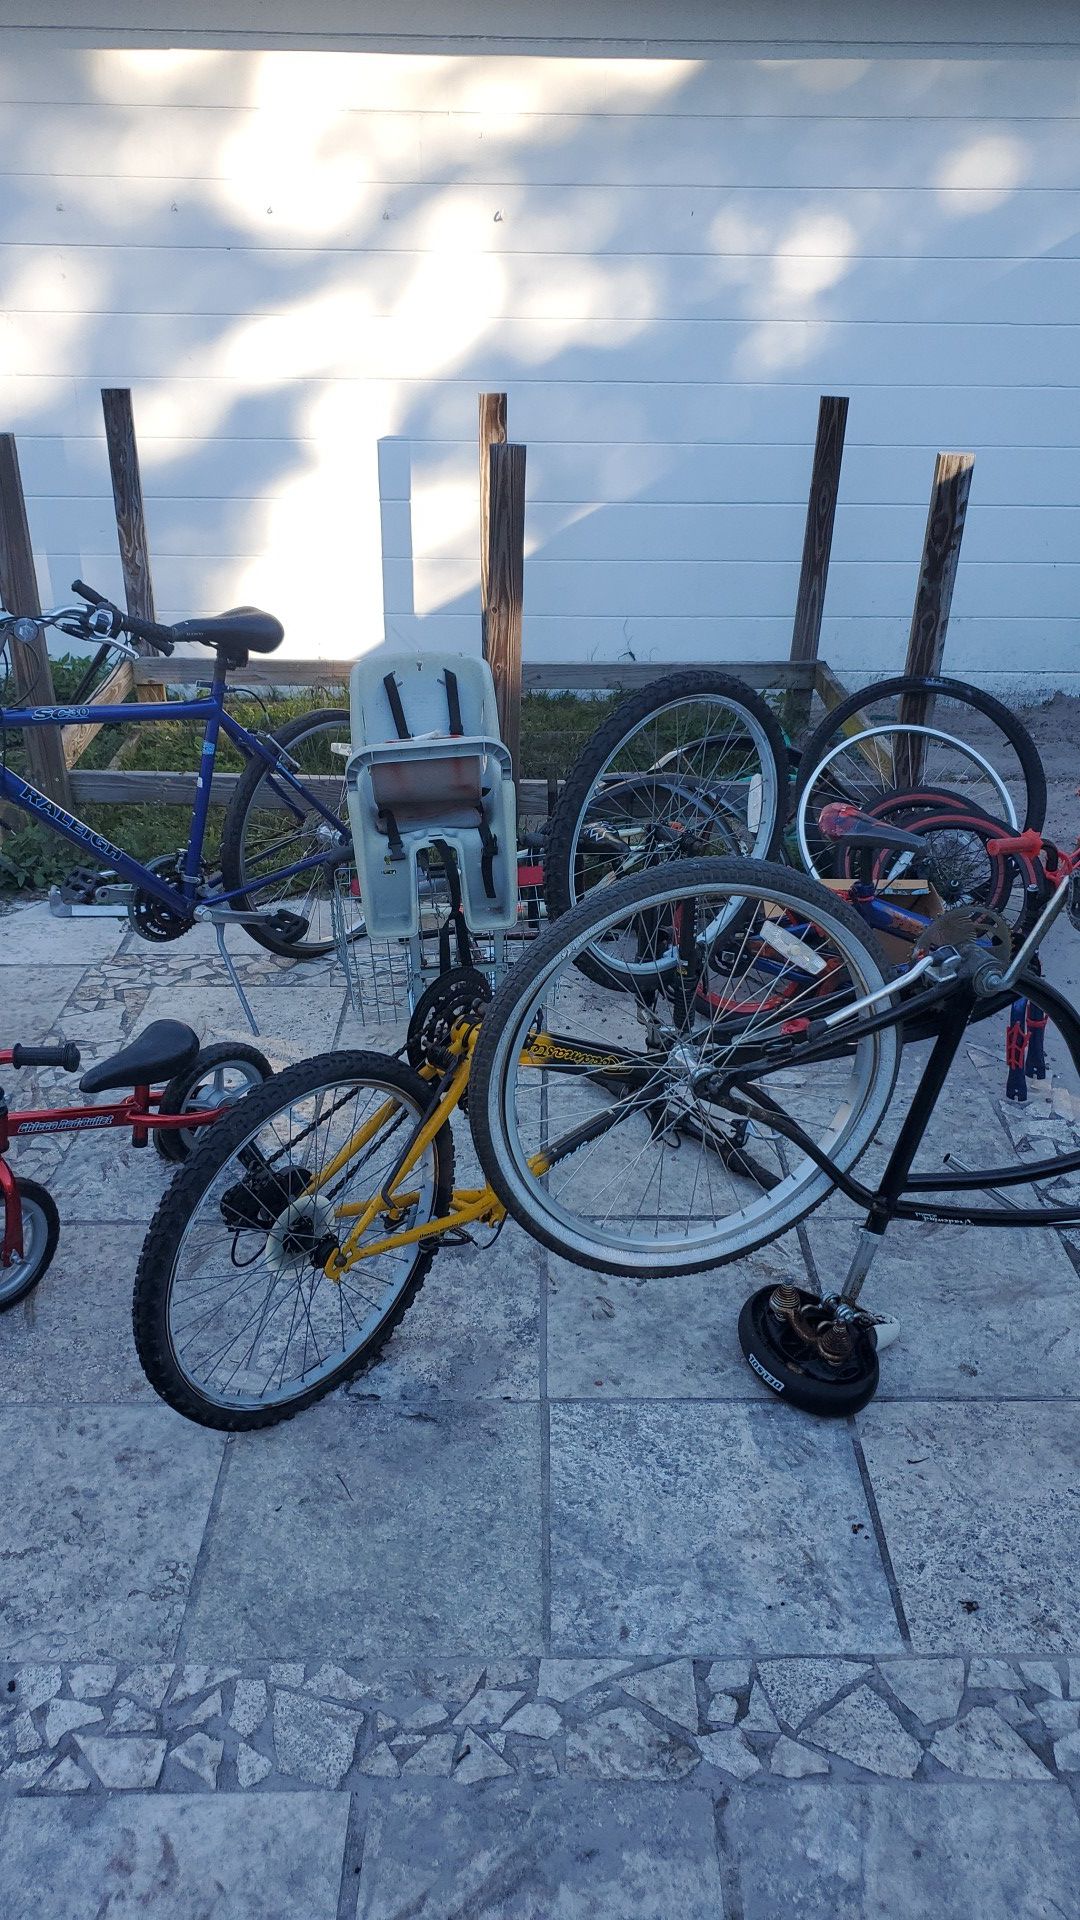 Full Bikes and Bike parts.